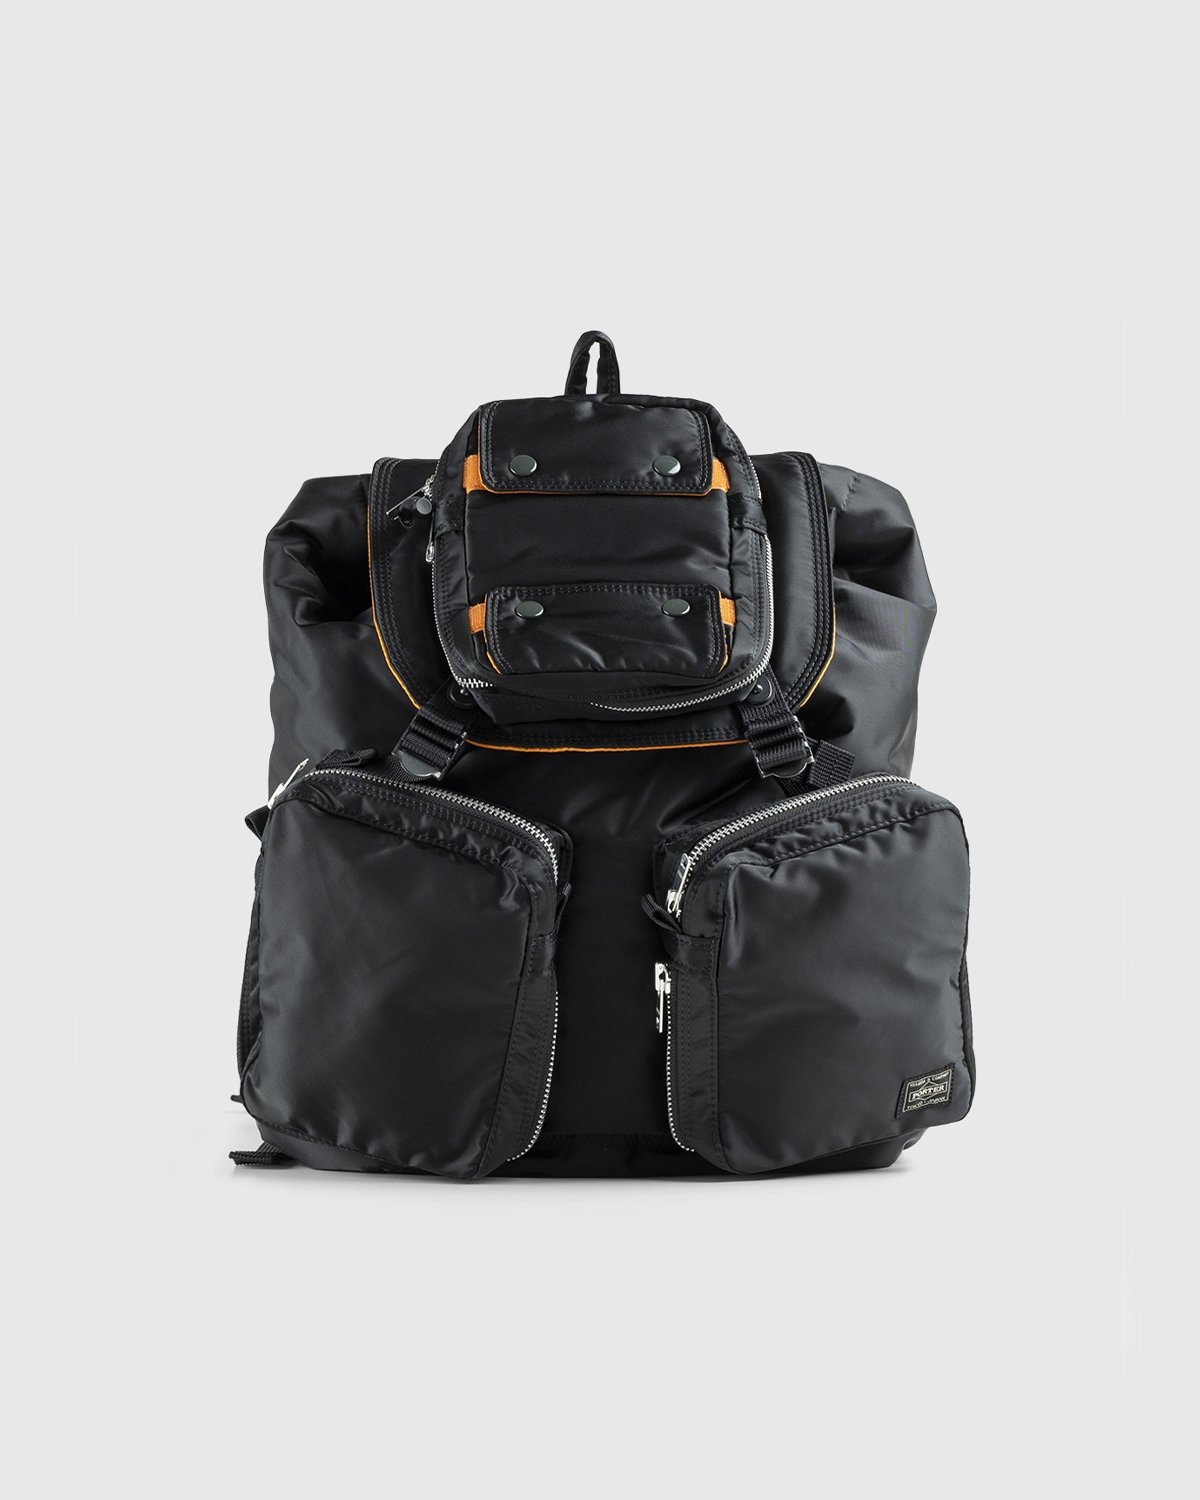 Porter-Yoshida & Co. – Rucksack Black - Backpacks - Black - Image 1